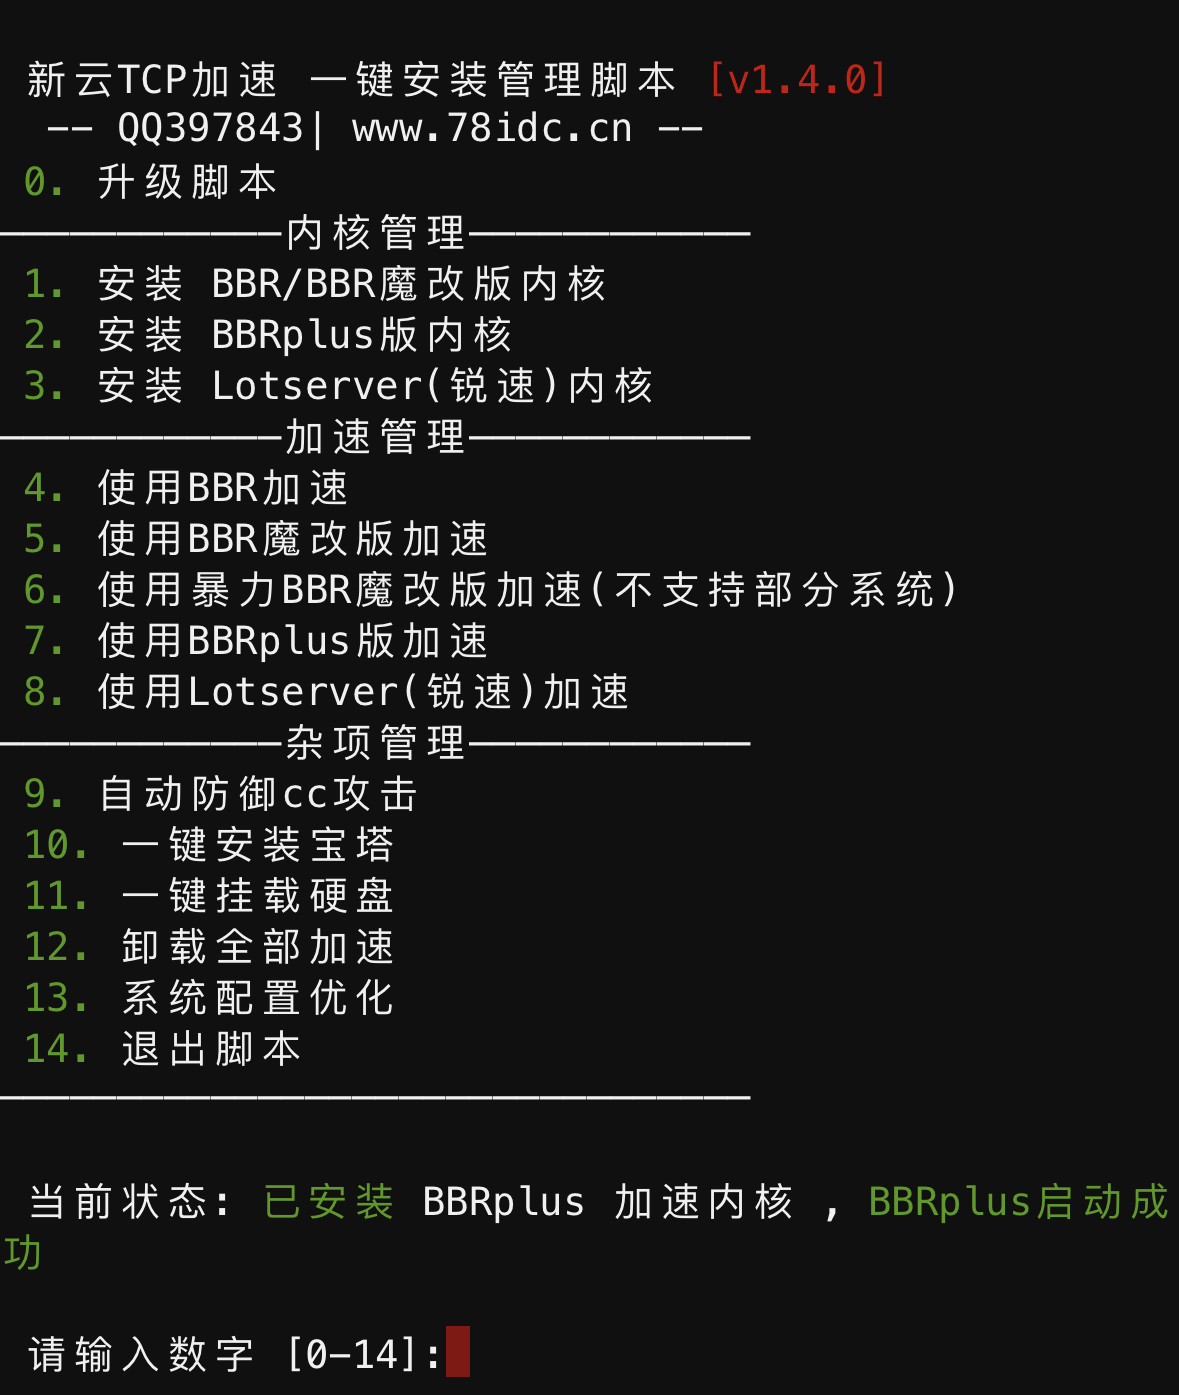 BBR 原版 / 魔改 /plus/ 锐速 / 七合一脚本 linux 加速脚本 / 硬盘挂载 /cc 防御 / 宝塔